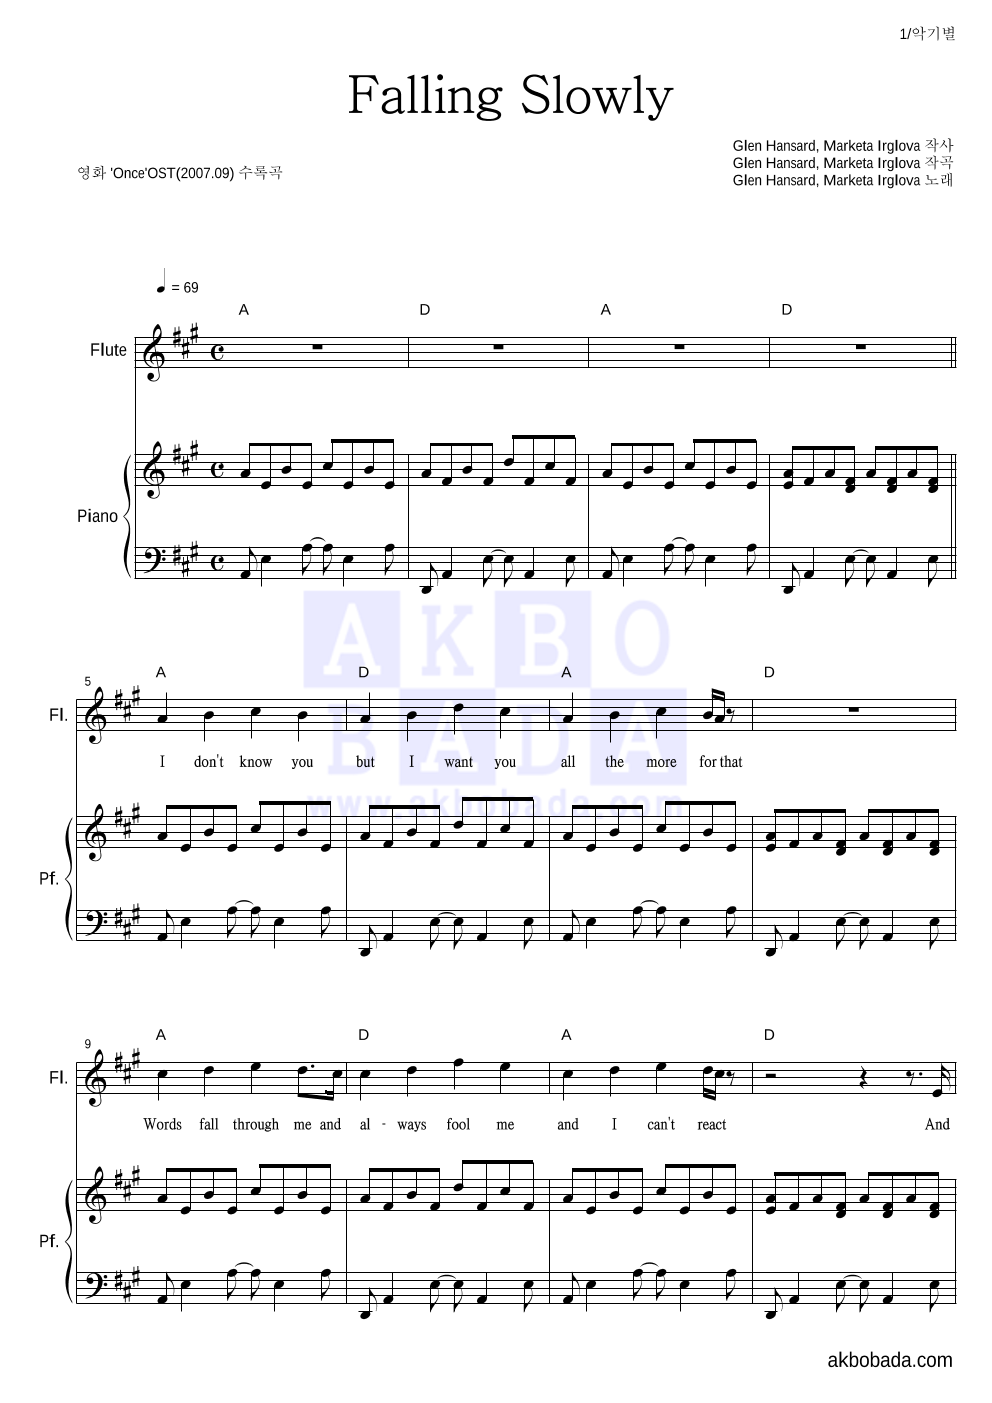 Glen Hansard,Marketa Irglova - Falling Slowly 플룻&피아노 악보 